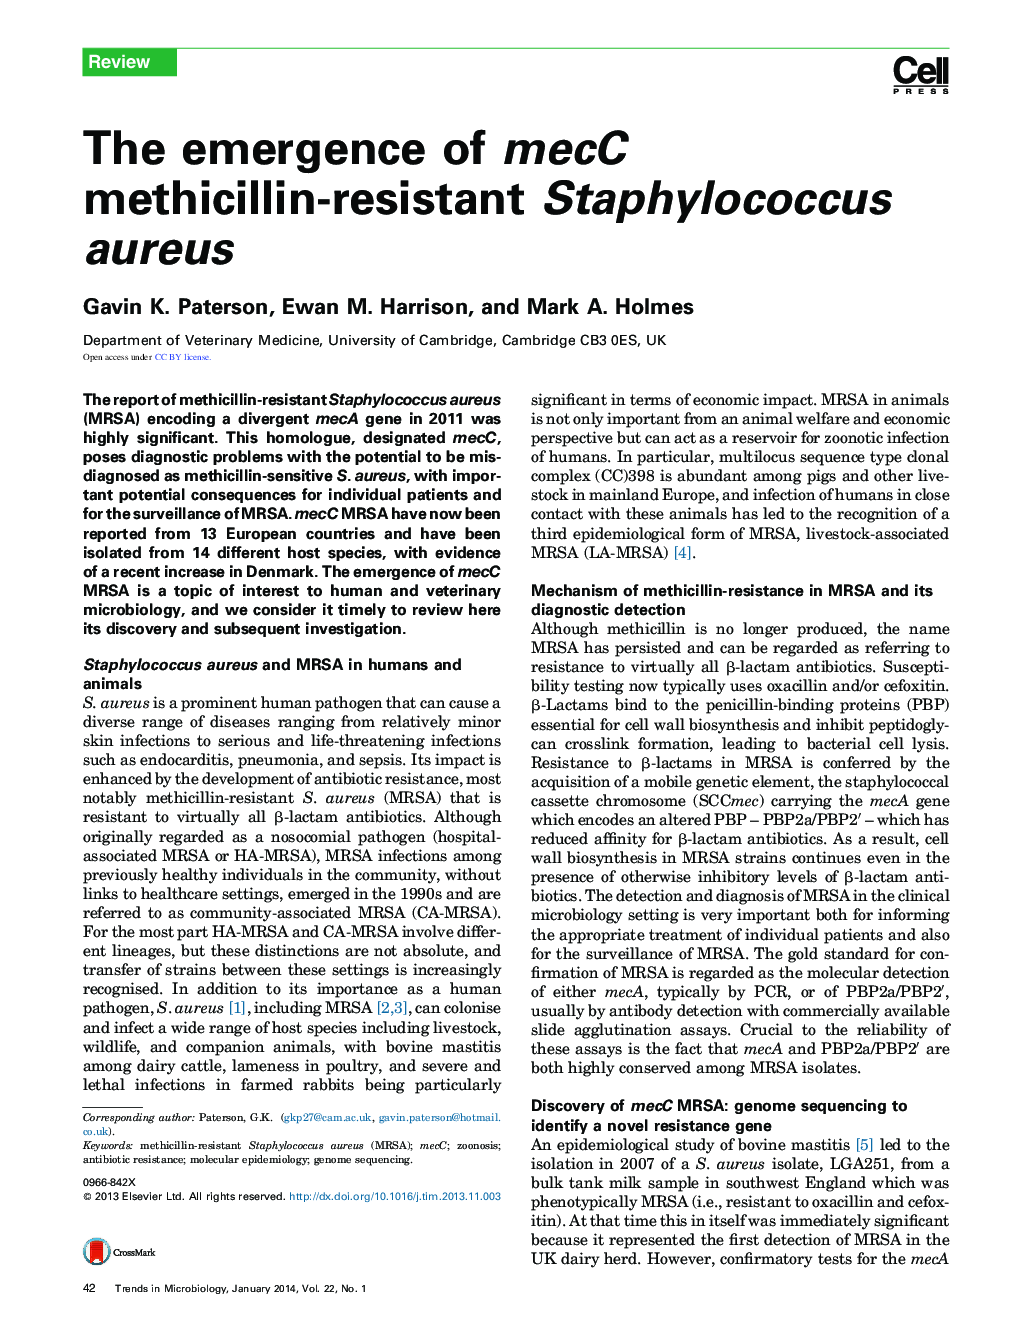 The emergence of mecC methicillin-resistant Staphylococcus aureus